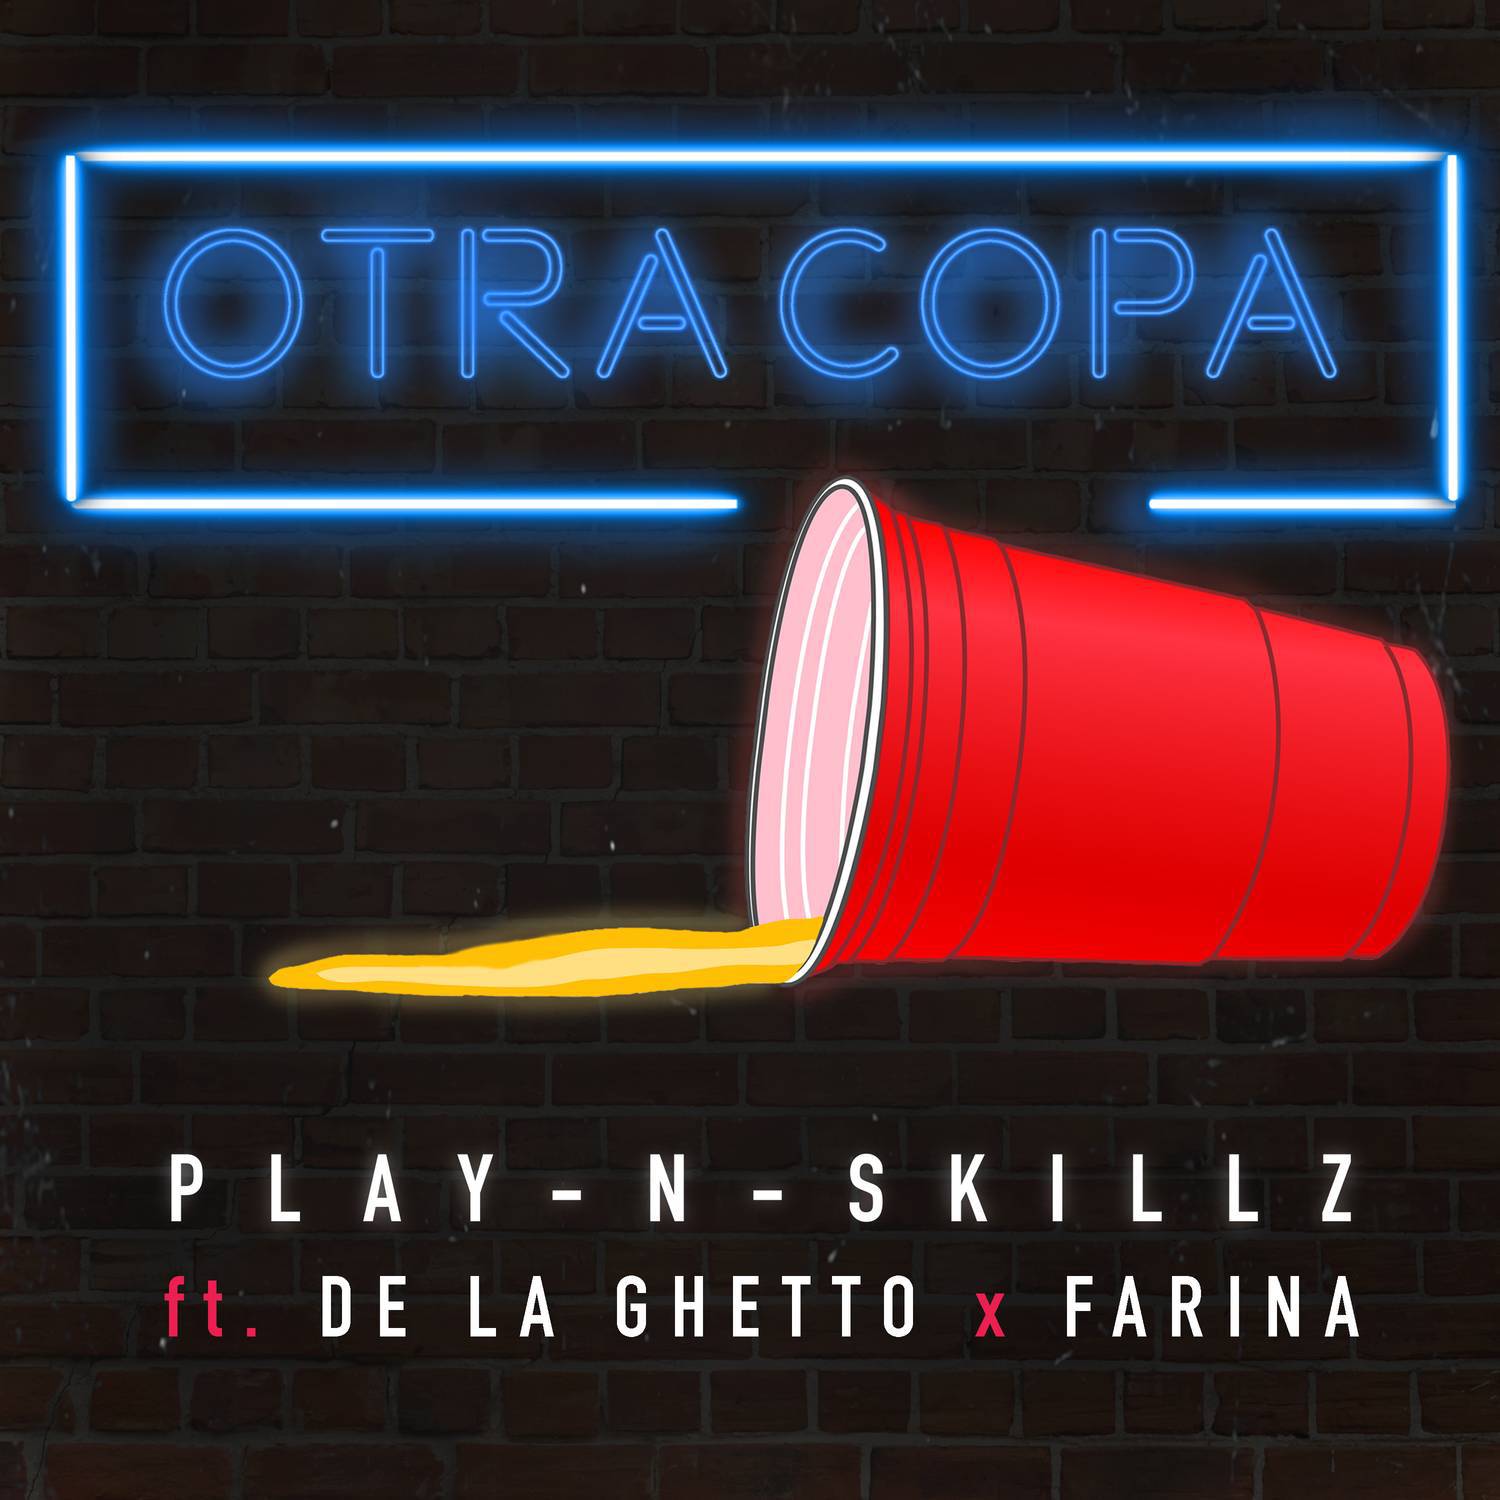 Otra Copa专辑